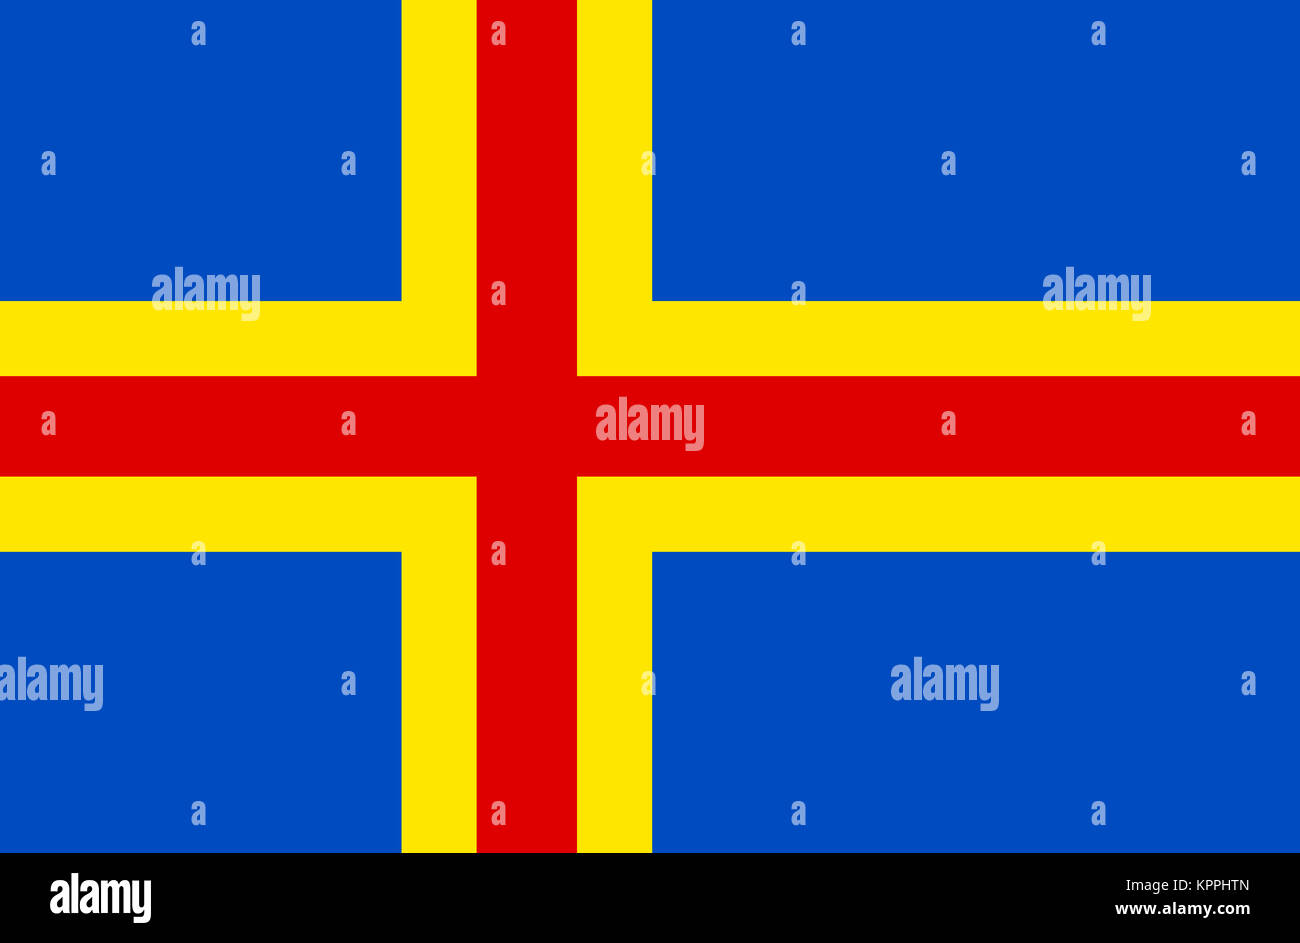 National flag of Aland Islands Stock Photo